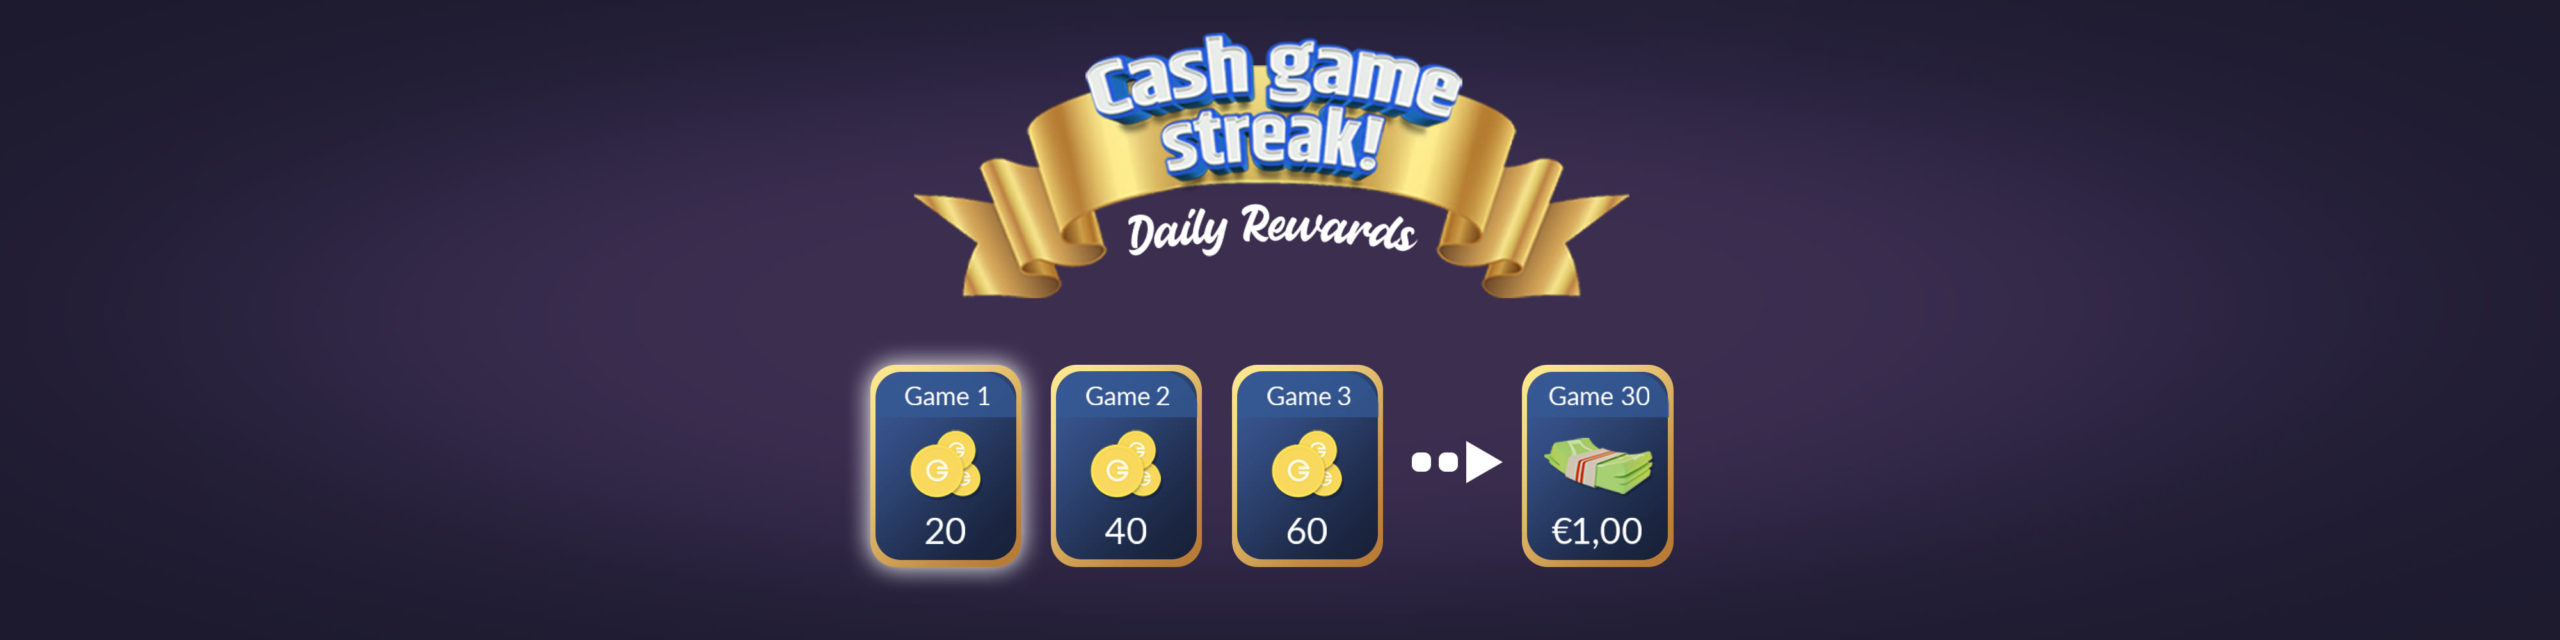 EazeGames launches Cash Game Streak rewards